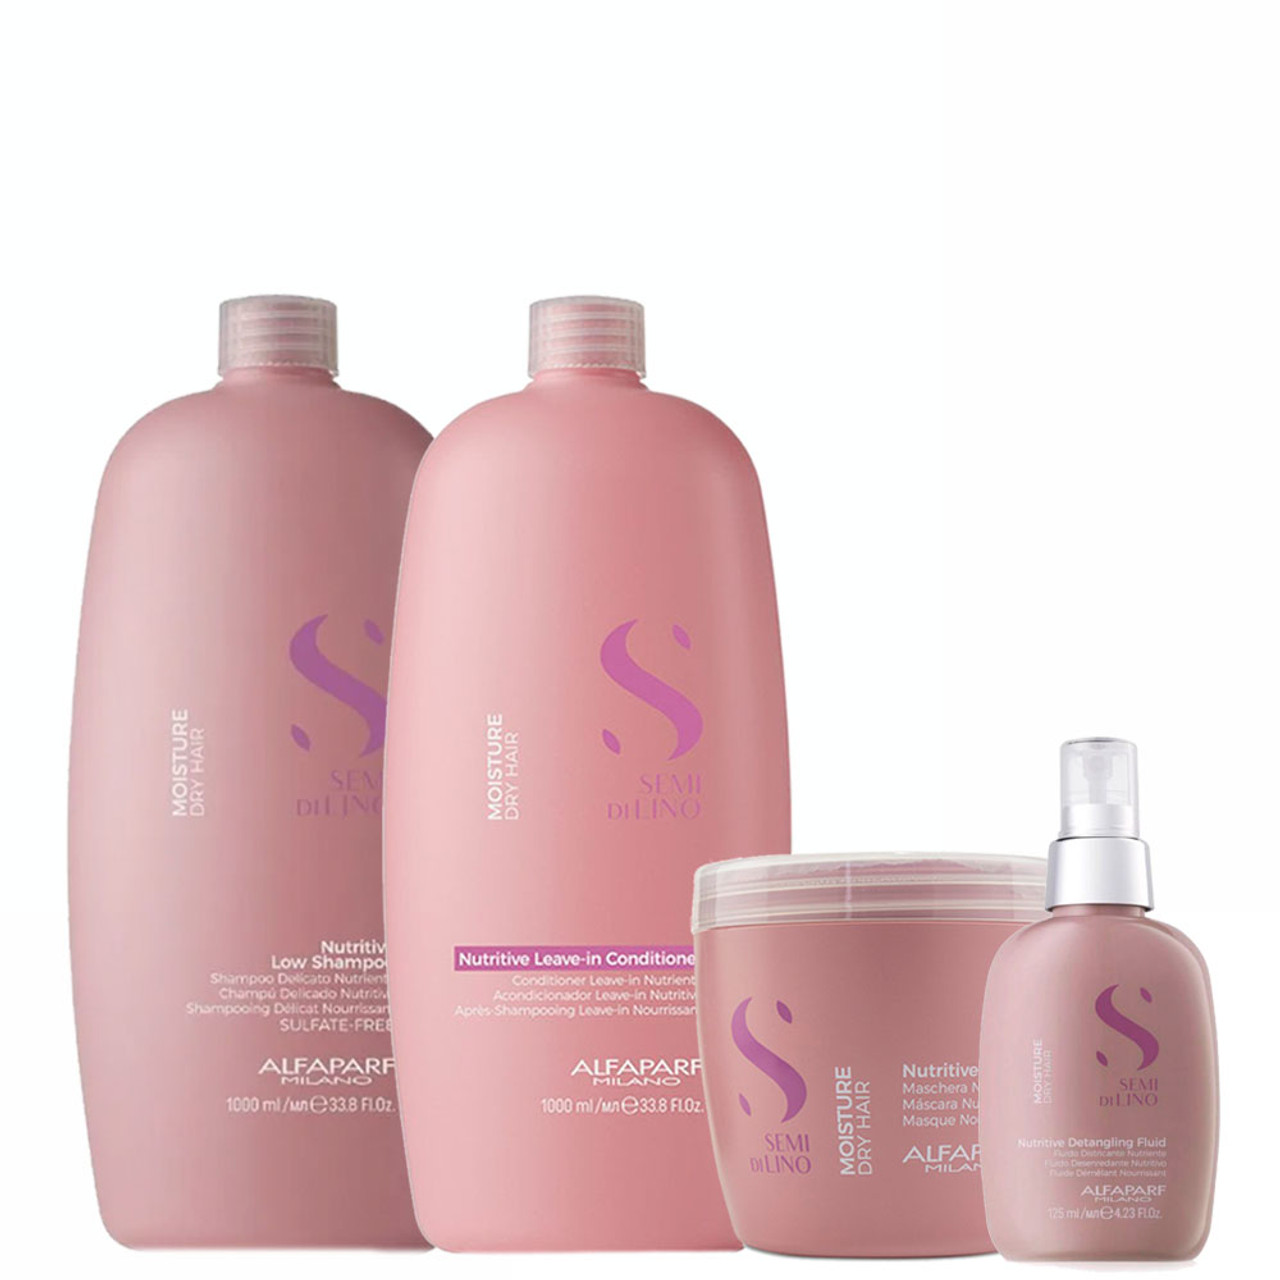 Kit Alfaparf Semi Di Lino Moisture Dry Hair Nutritive Complete Hydration  Professional Use Hair Care